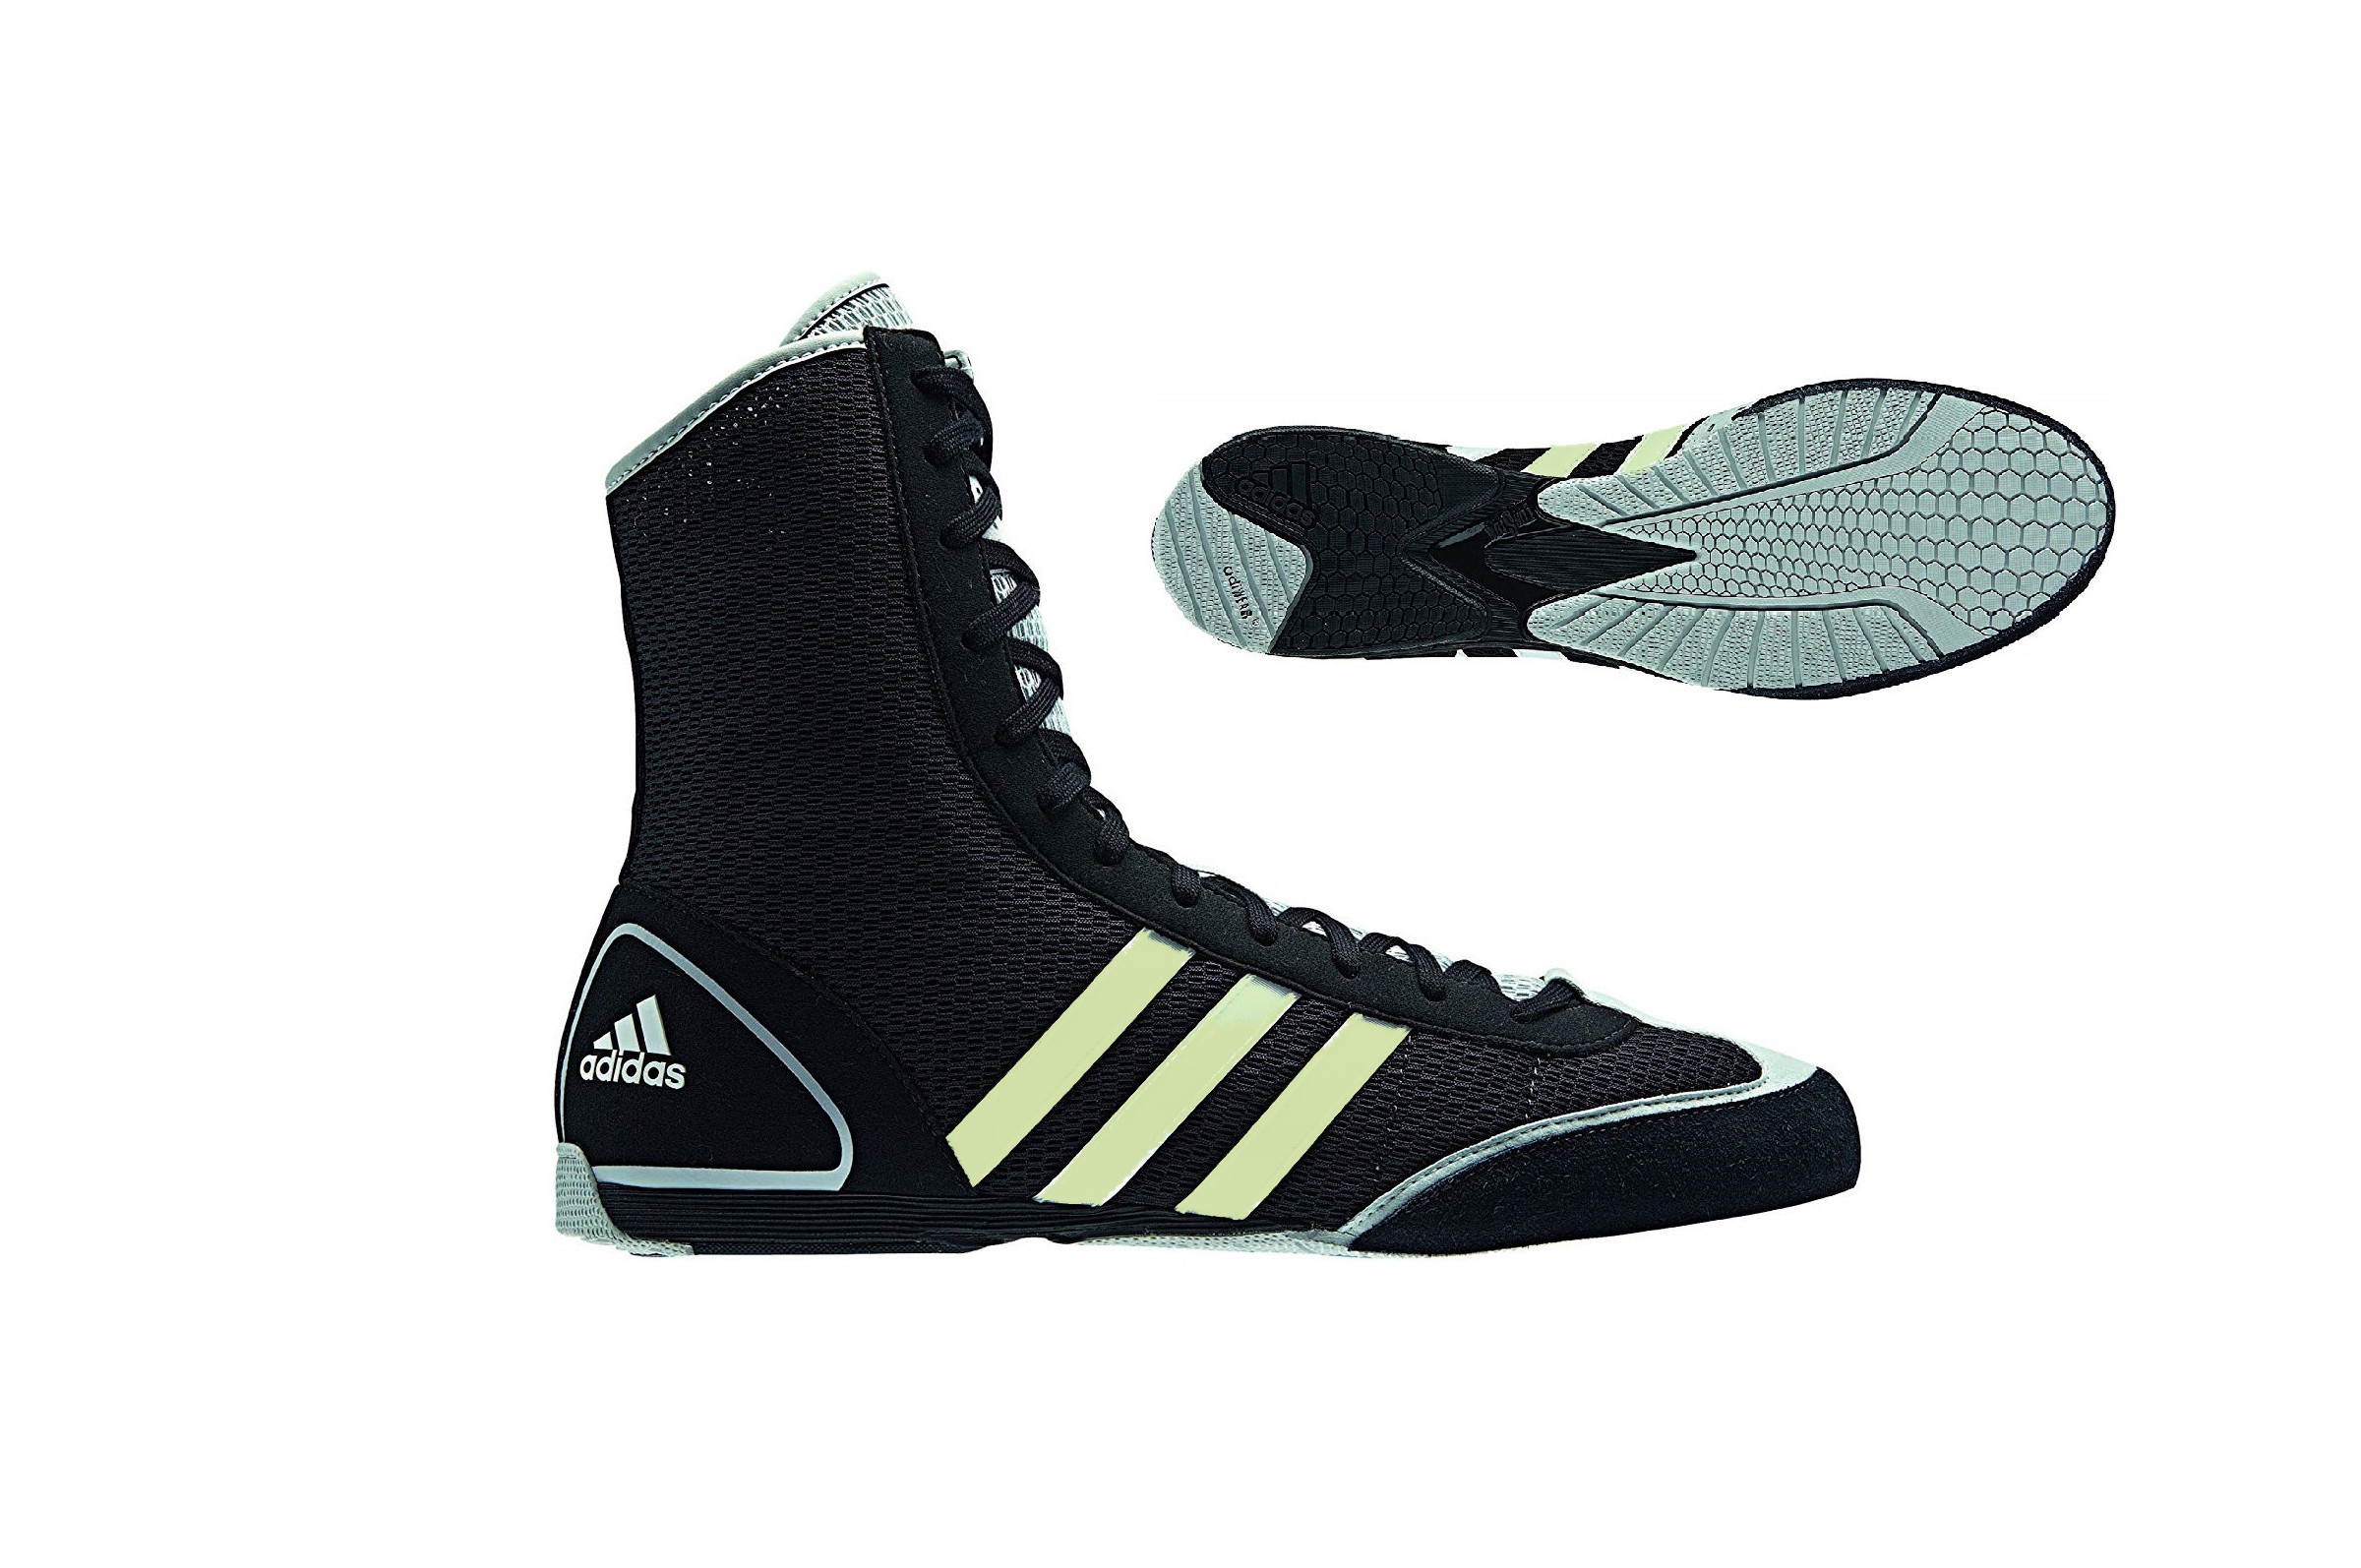 adidas savate pro boxing shoes